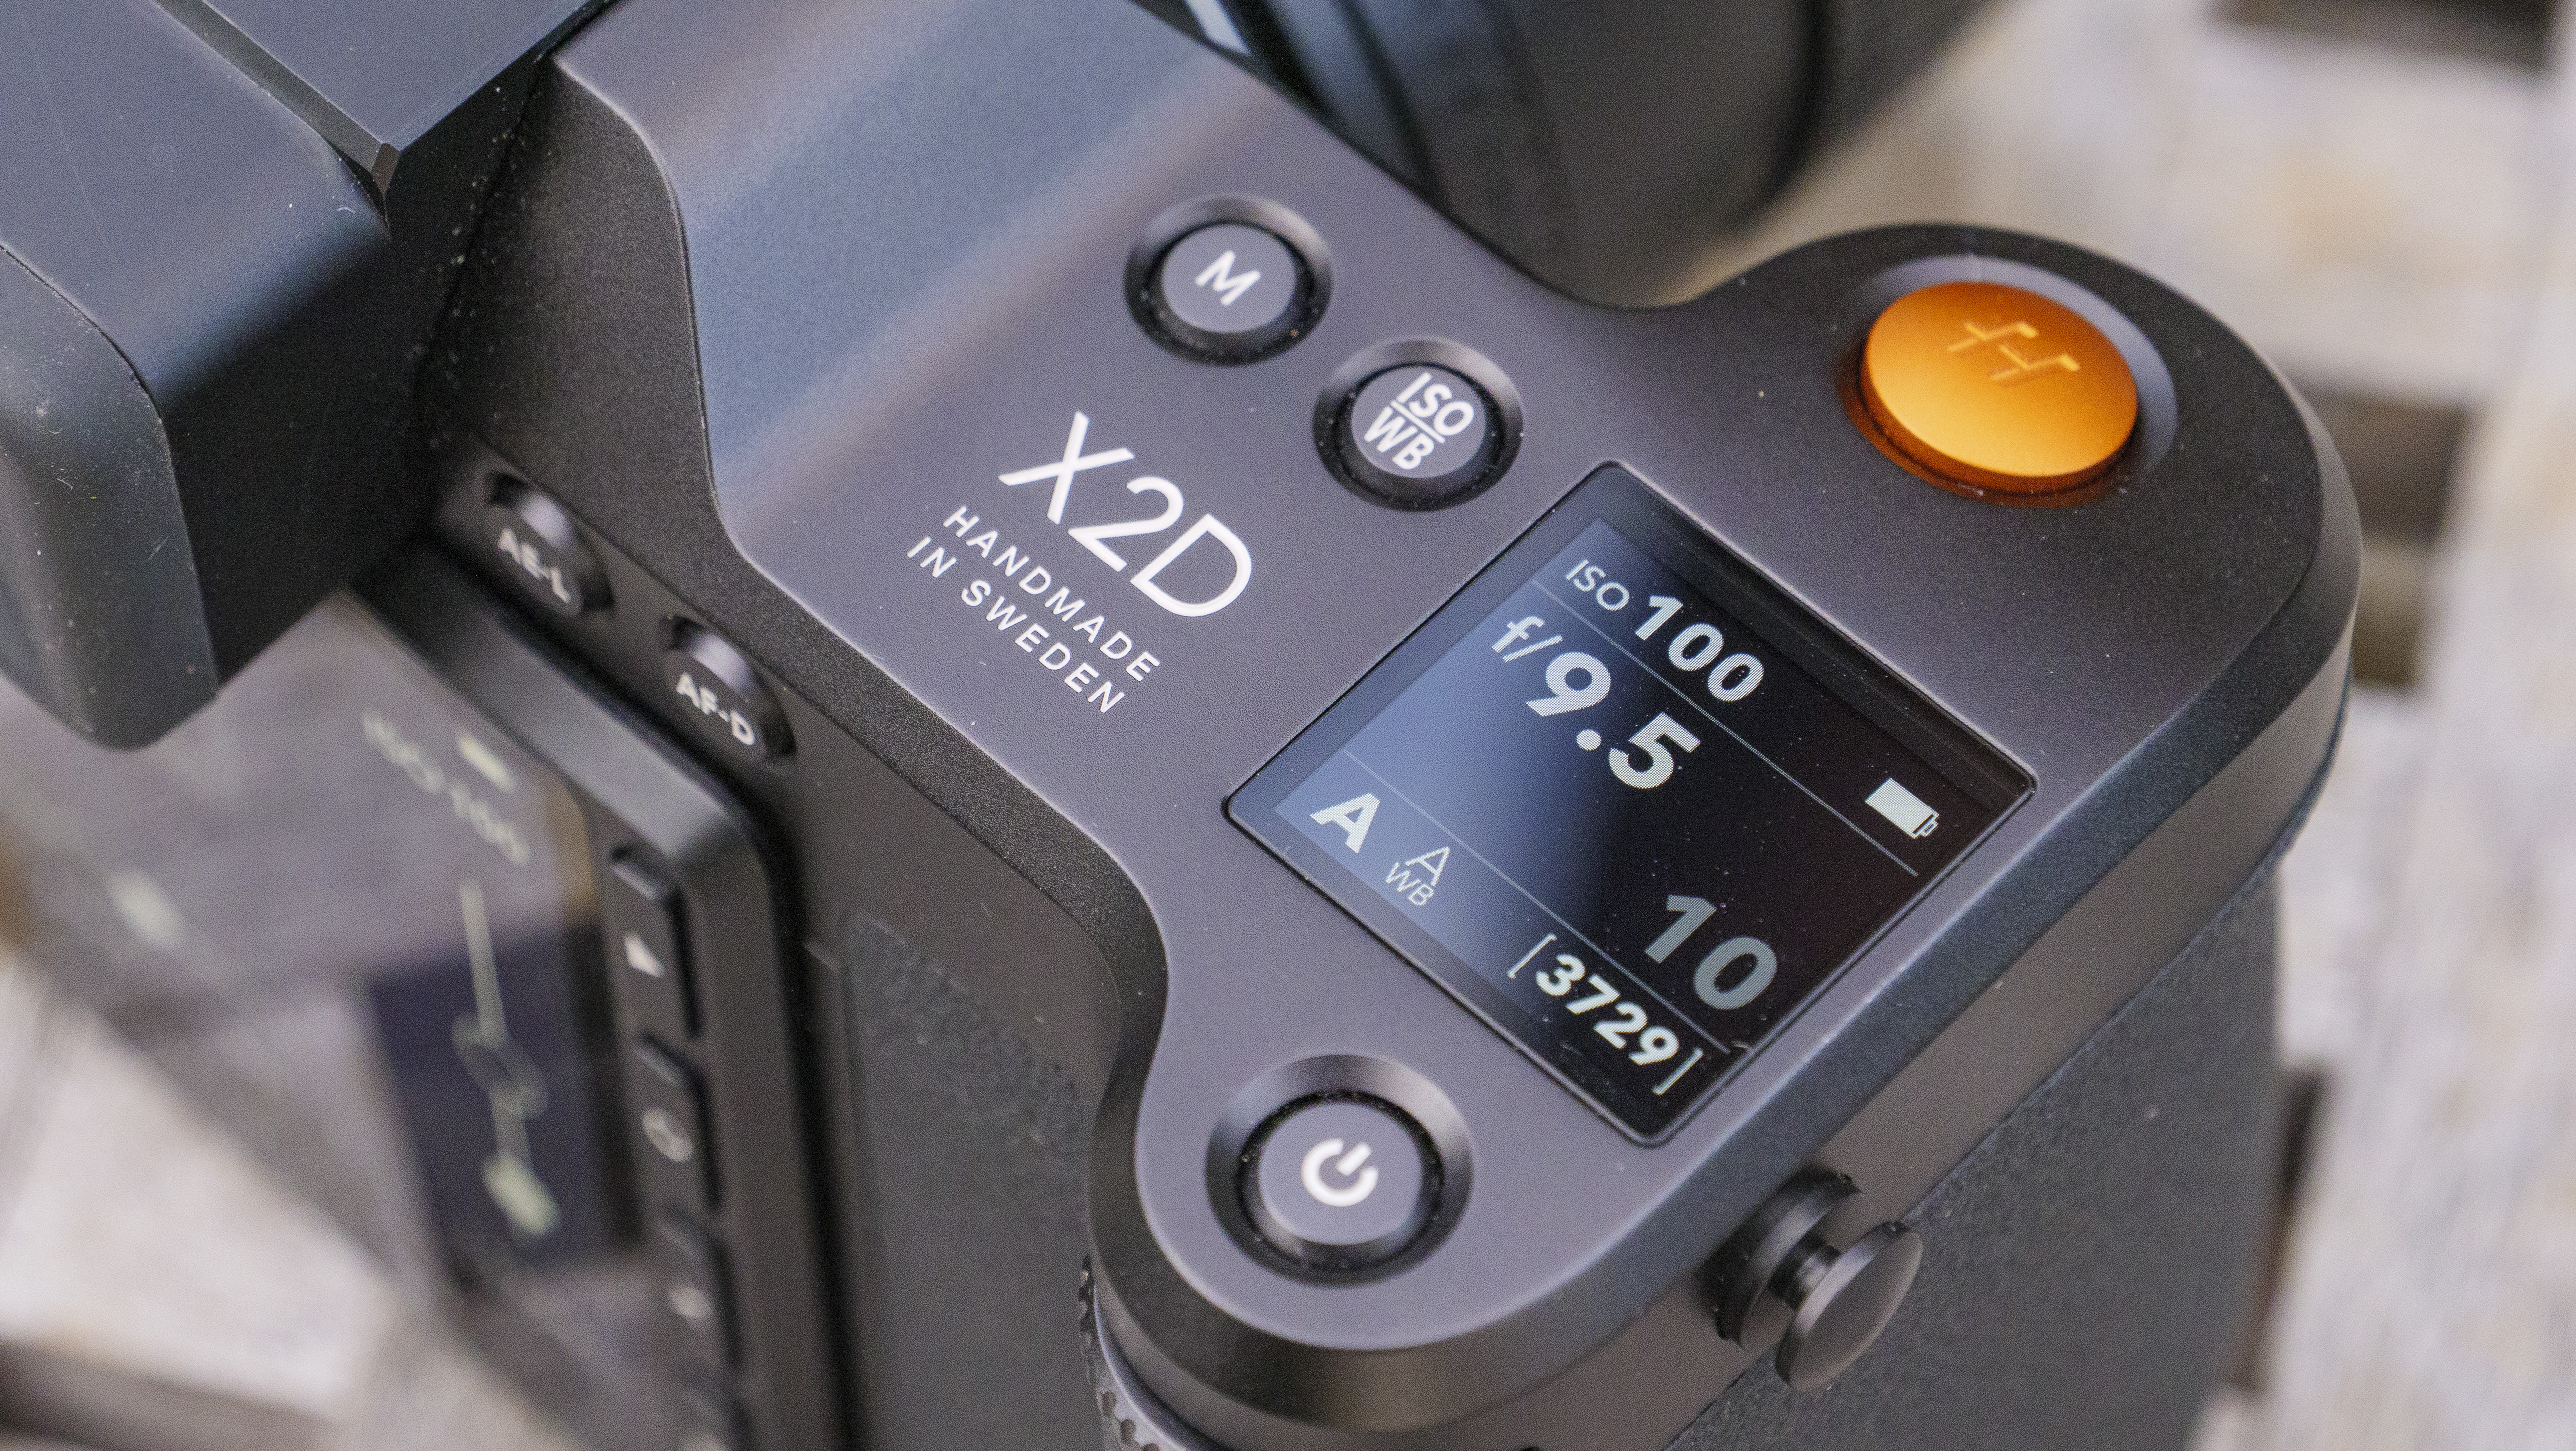 The Hasselblad X2D 100C camera close up of controls